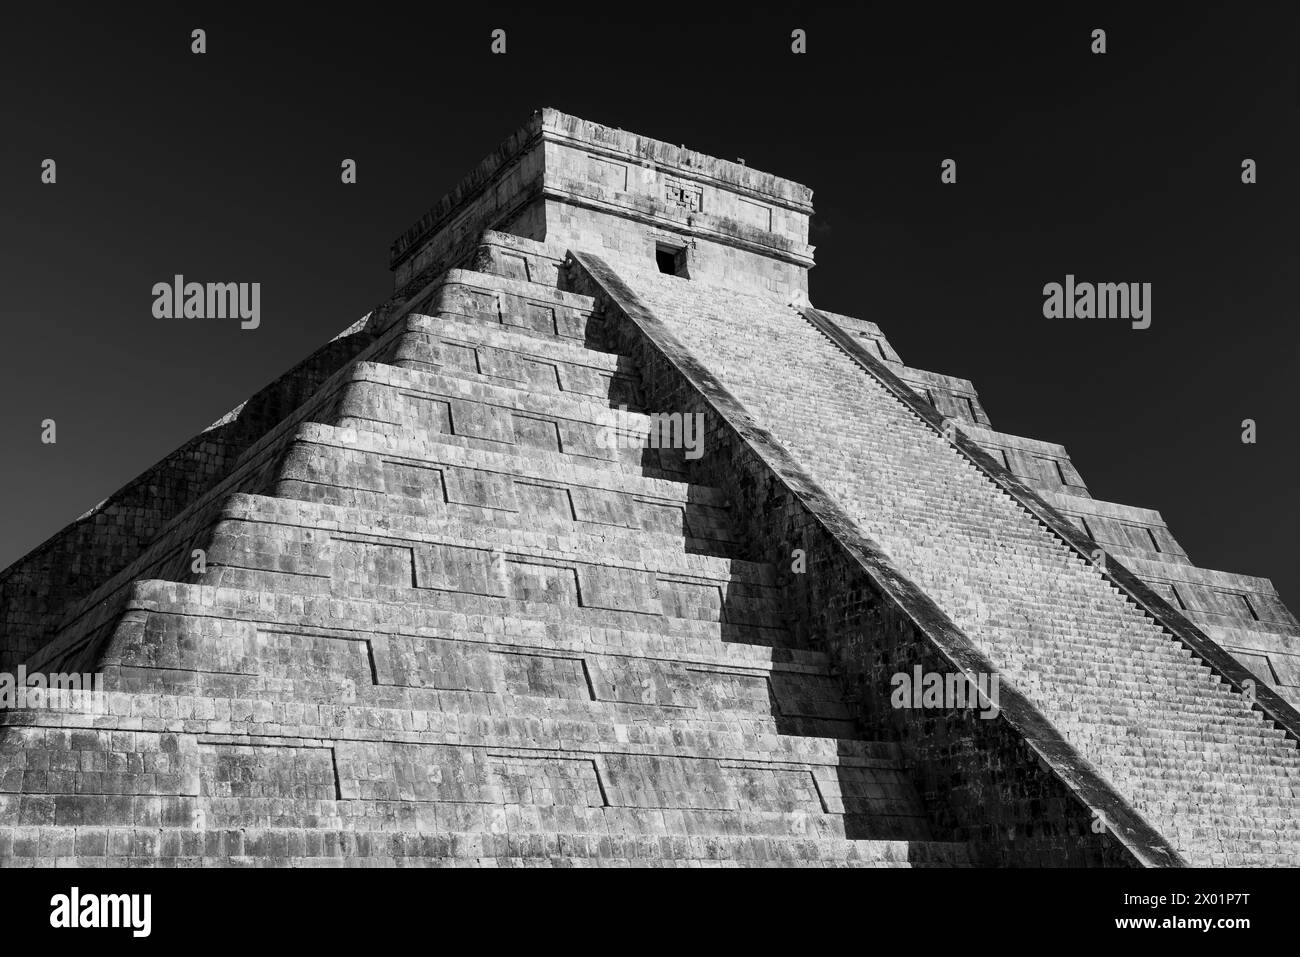 Piramide maya di Kukulkan in bianco e nero, Chichen Itza, Messico. Foto Stock